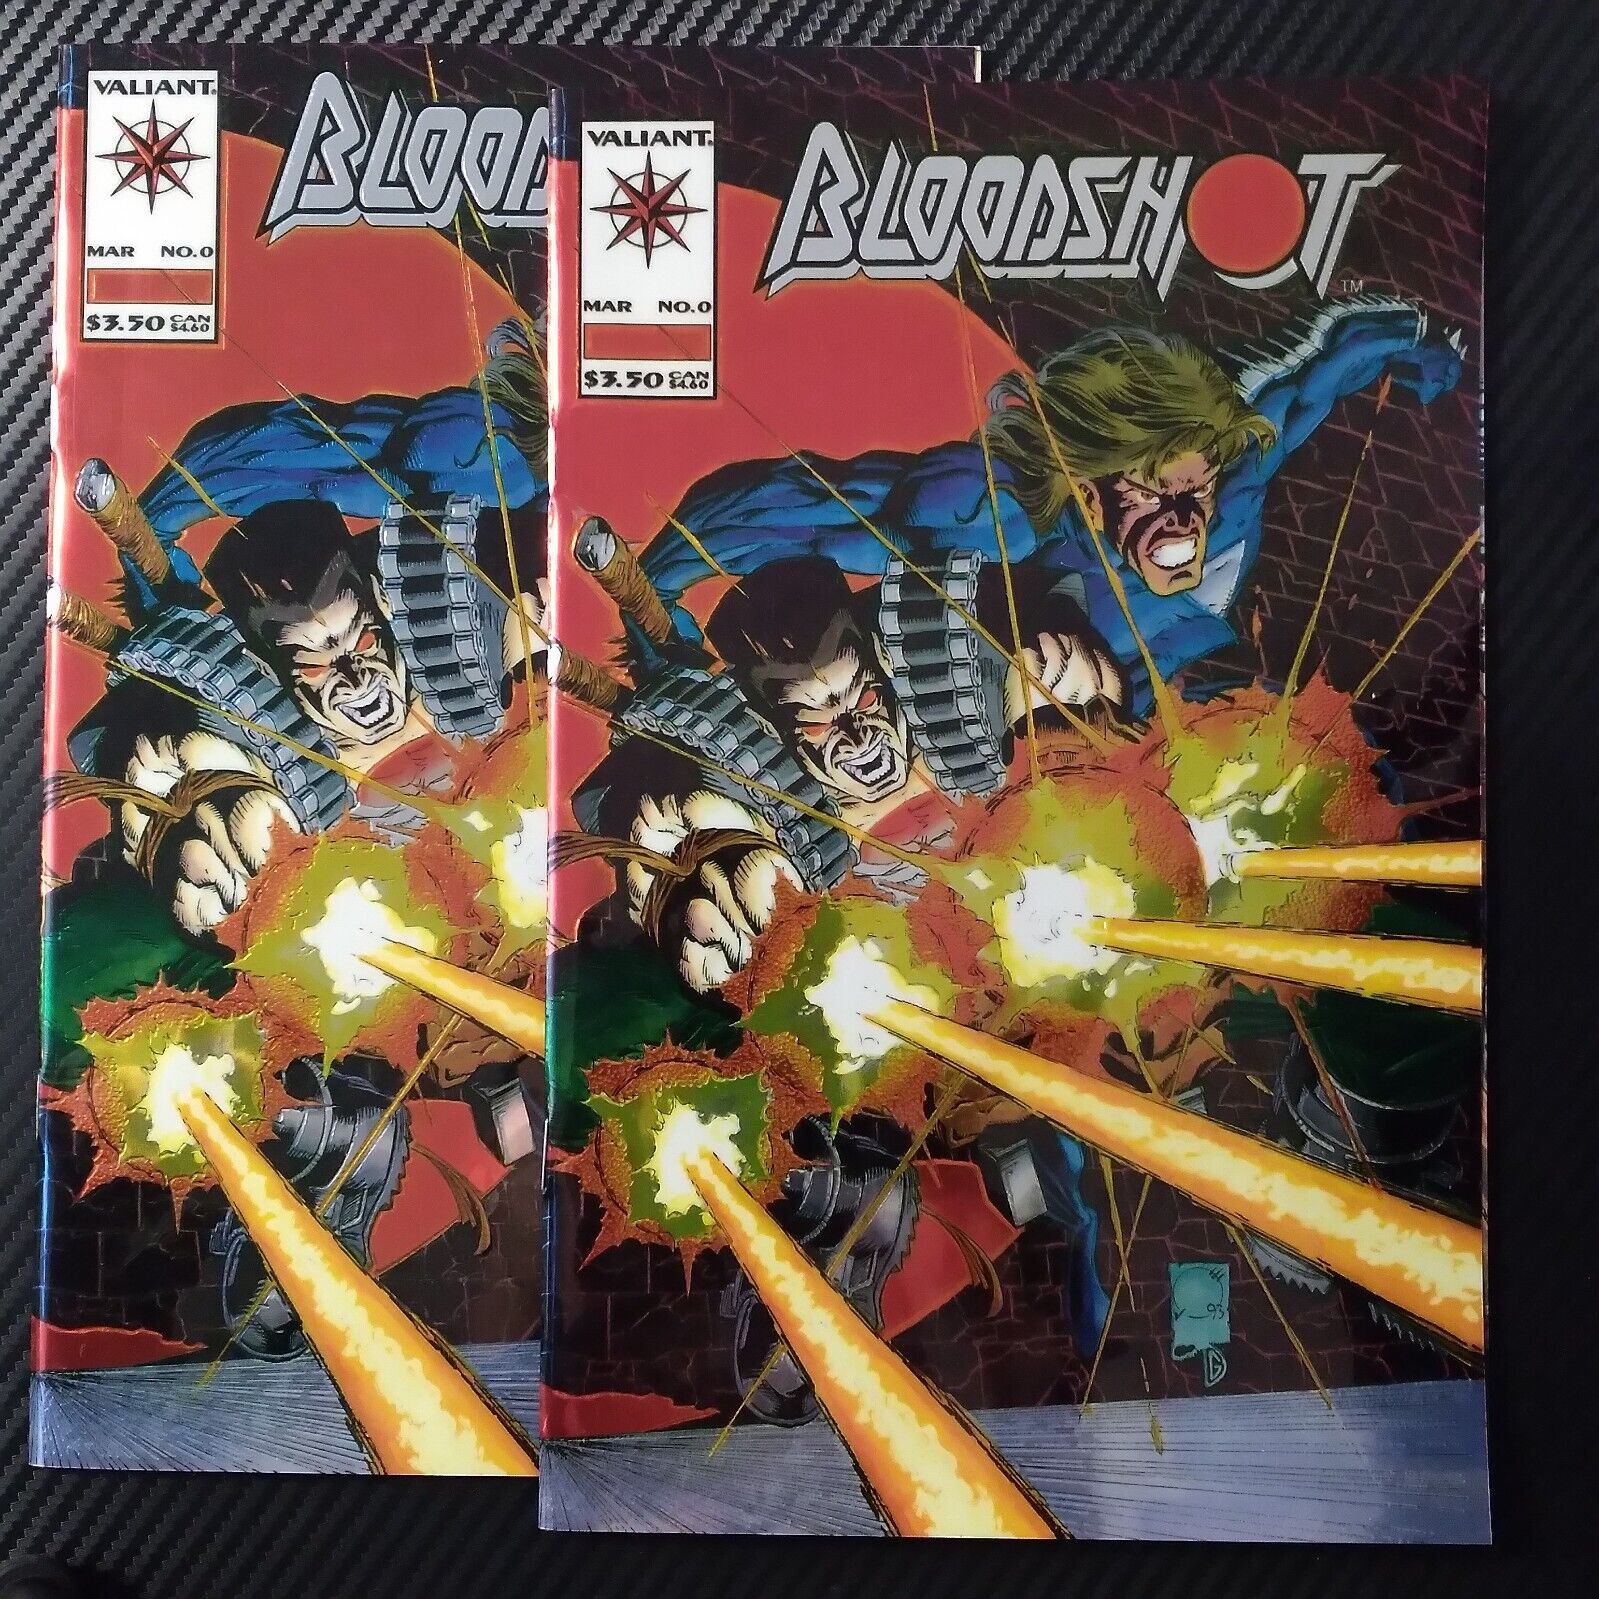 1994 Bloodshot Valiant Comic Book #0 - Matching Pair - NICE